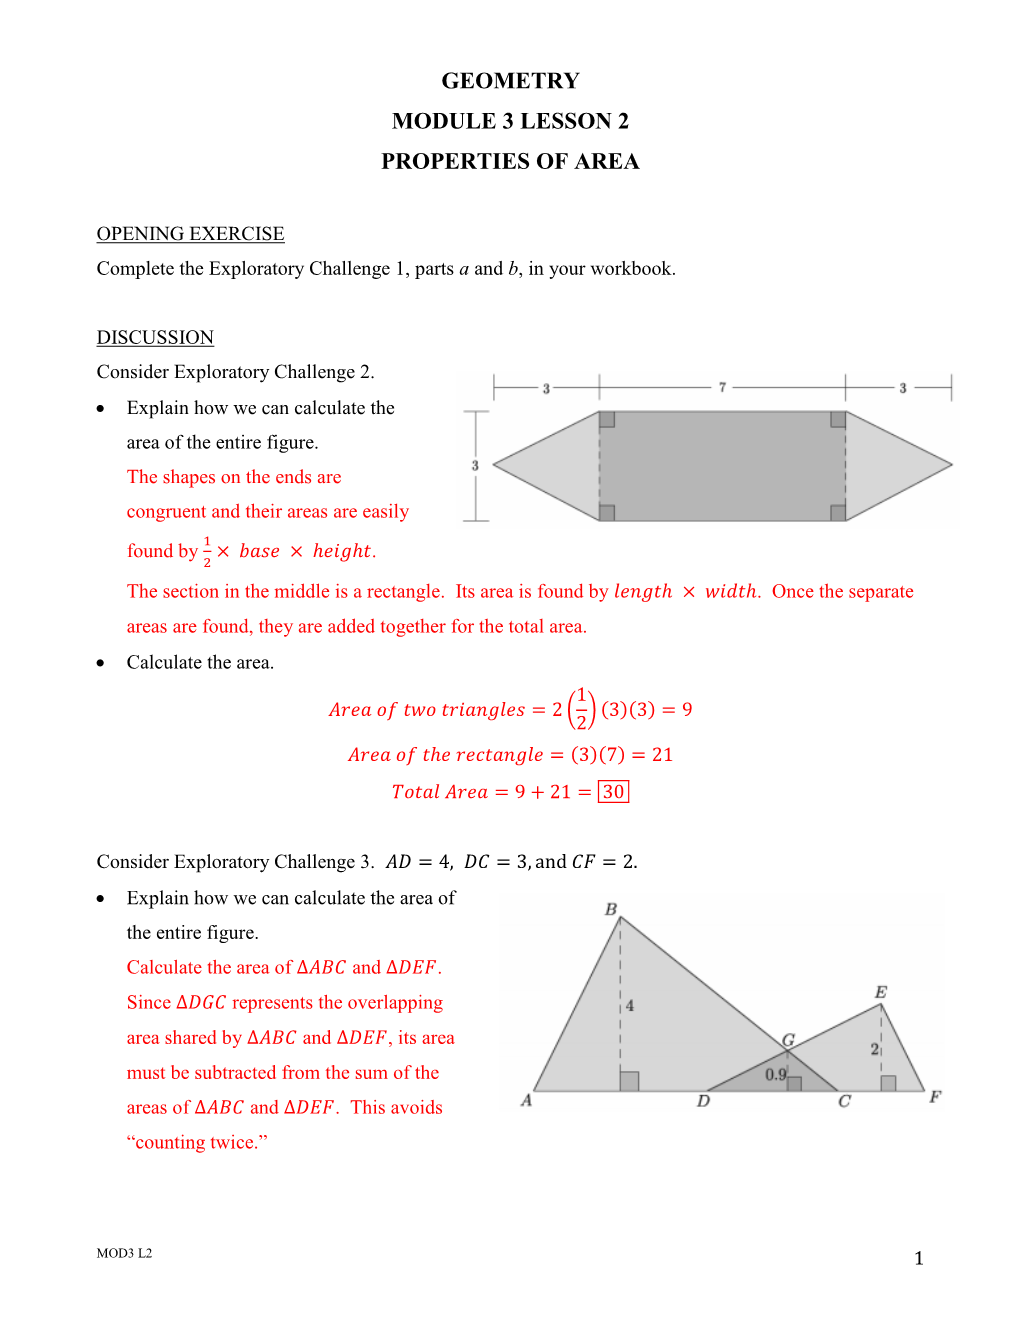 Geometry Module 3 Lesson 2 Properties of Area